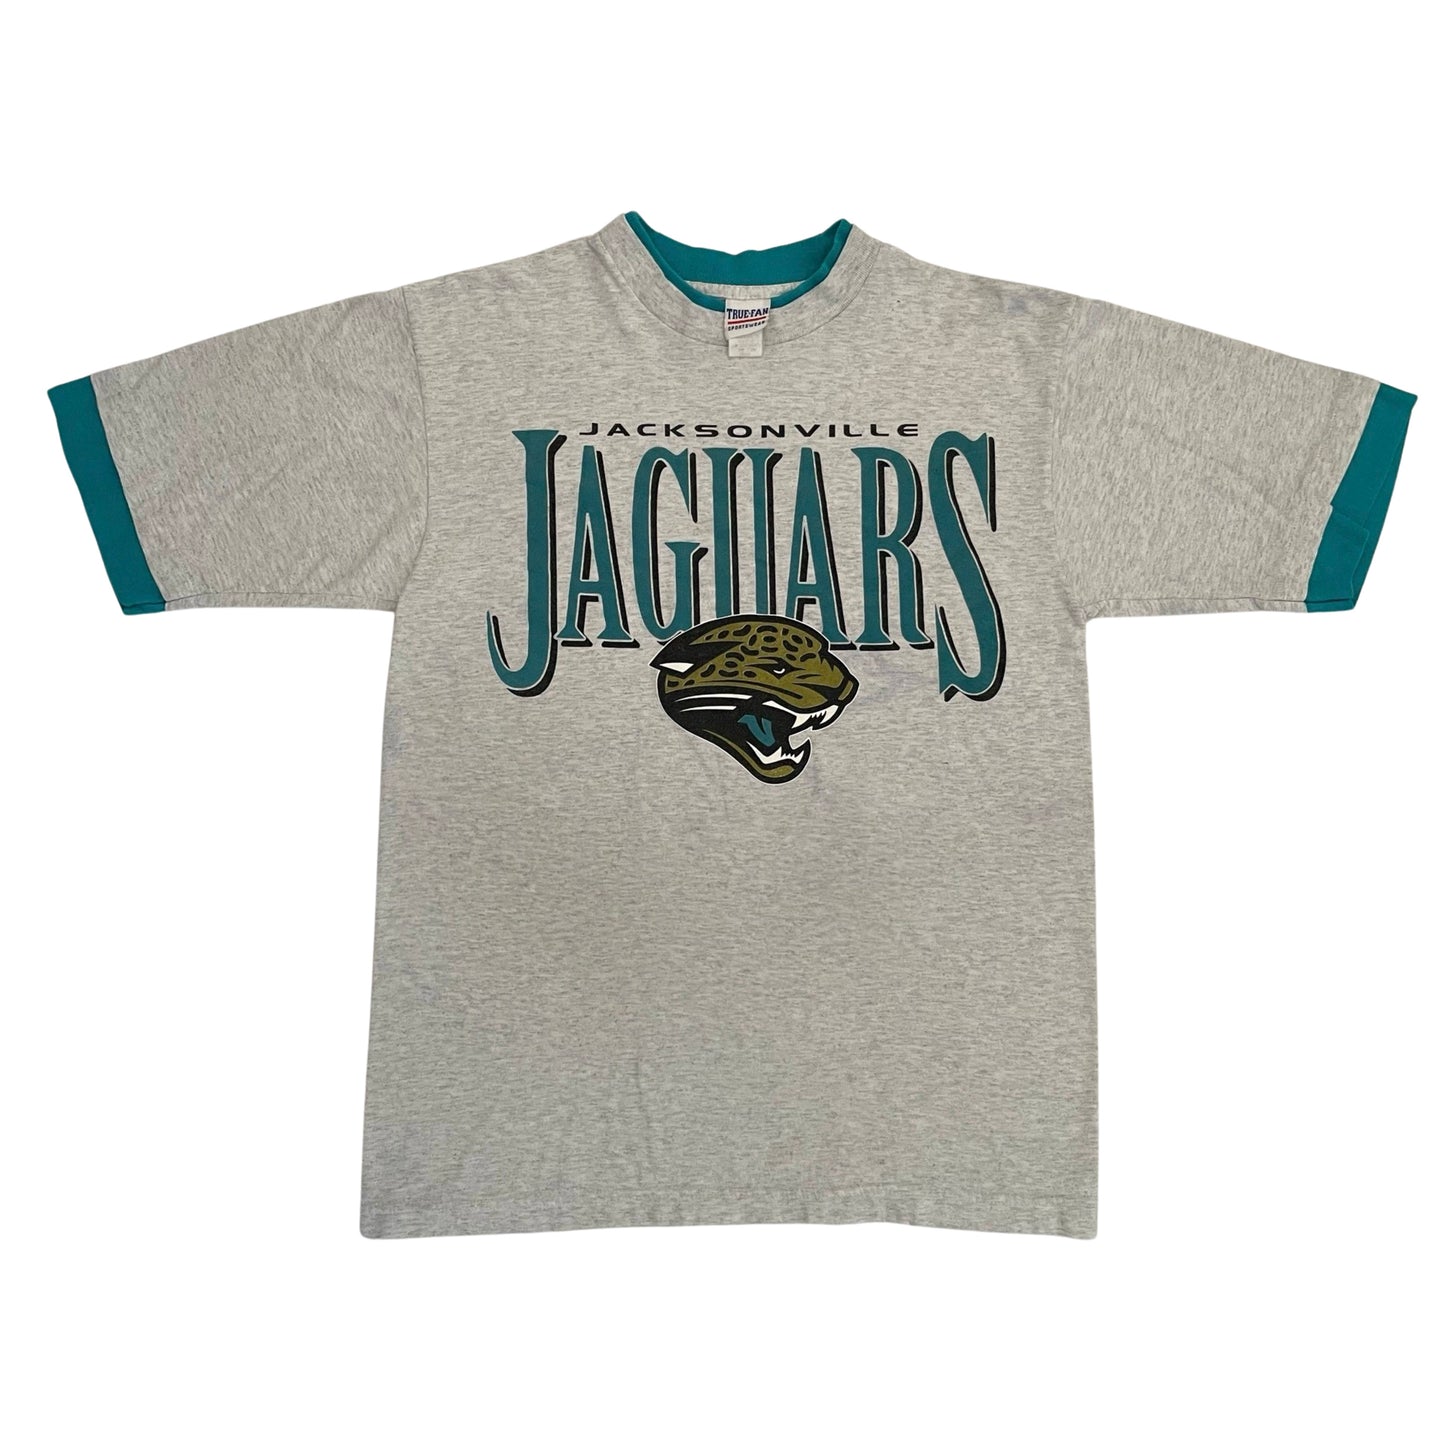 Vintage Jacksonville Jaguars shirt size SMALL